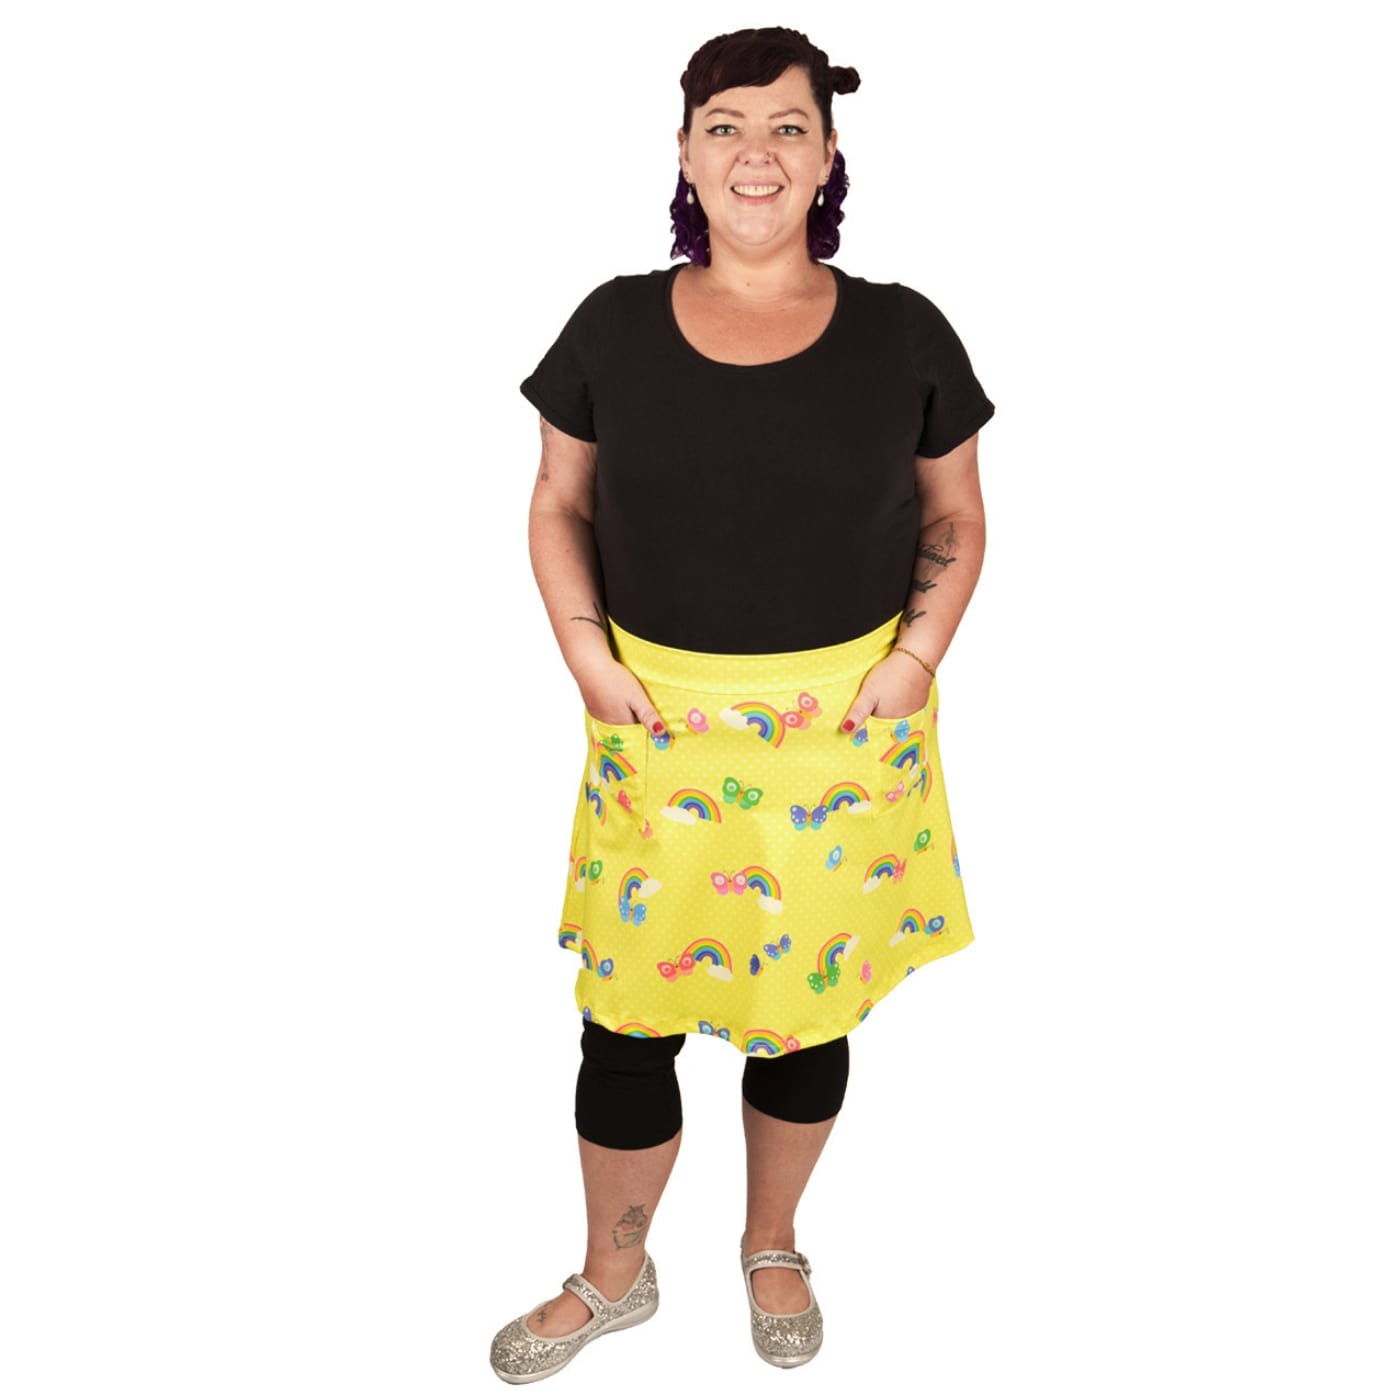 Sunshine Short Skirt by RainbowsAndFairies.com.au (Rainbows - Butterflies - Yellow Polka Dot - Kitsch - Aline Skirt With Pockets - Vintage Inspired) - SKU: CL_SHORT_SUNSH_ORG - Pic-07